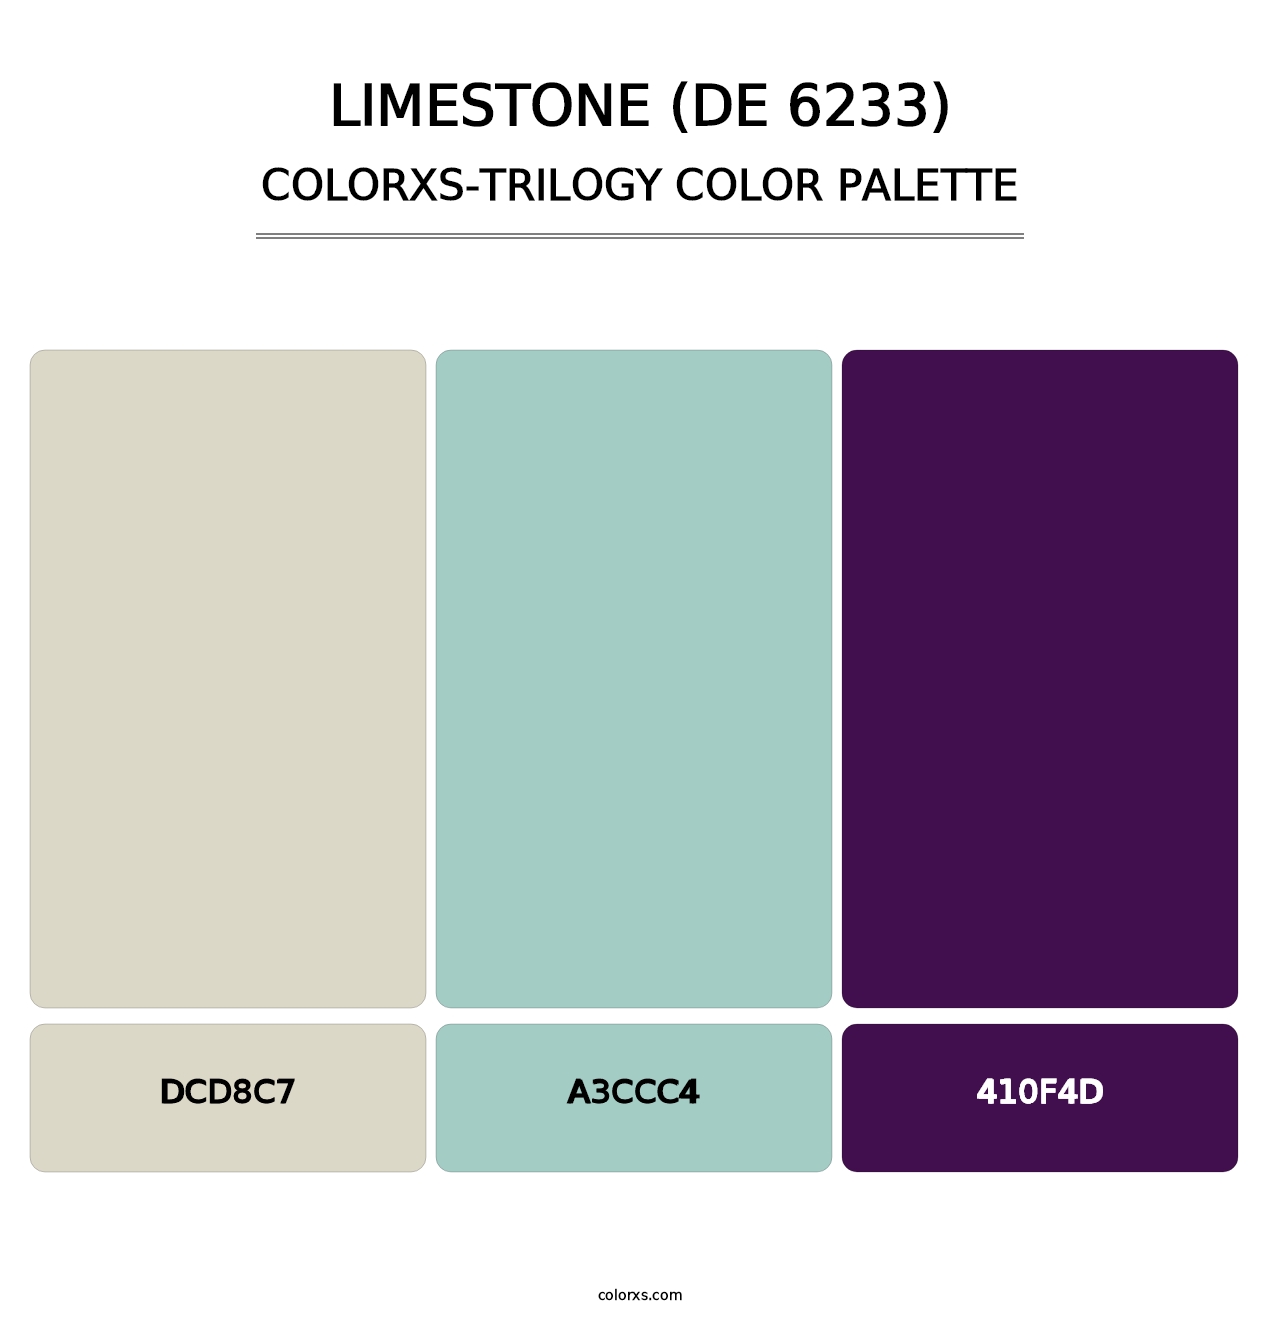 Limestone (DE 6233) - Colorxs Trilogy Palette